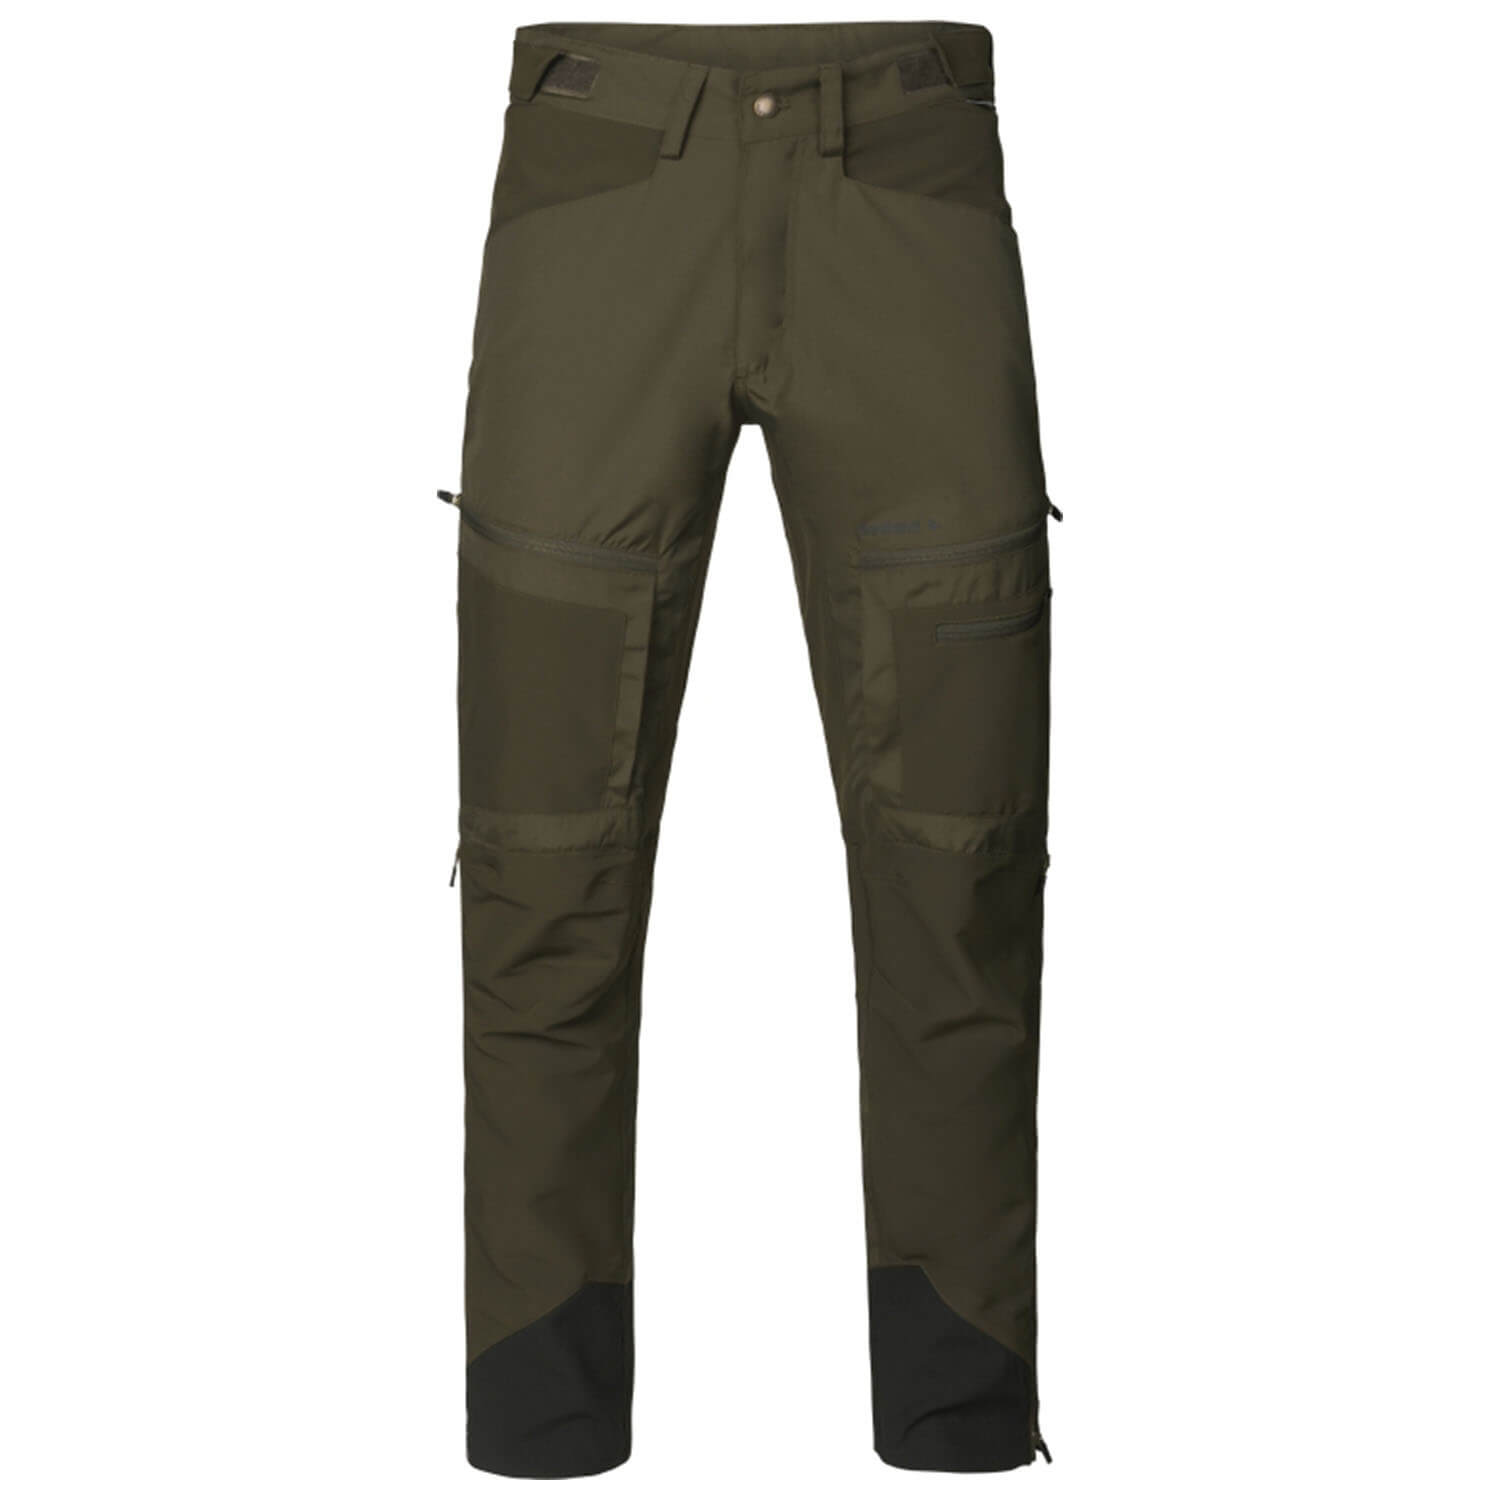 Seeland pants hemlock (Pine Green/Grizzly Brown) - Hunting Trousers